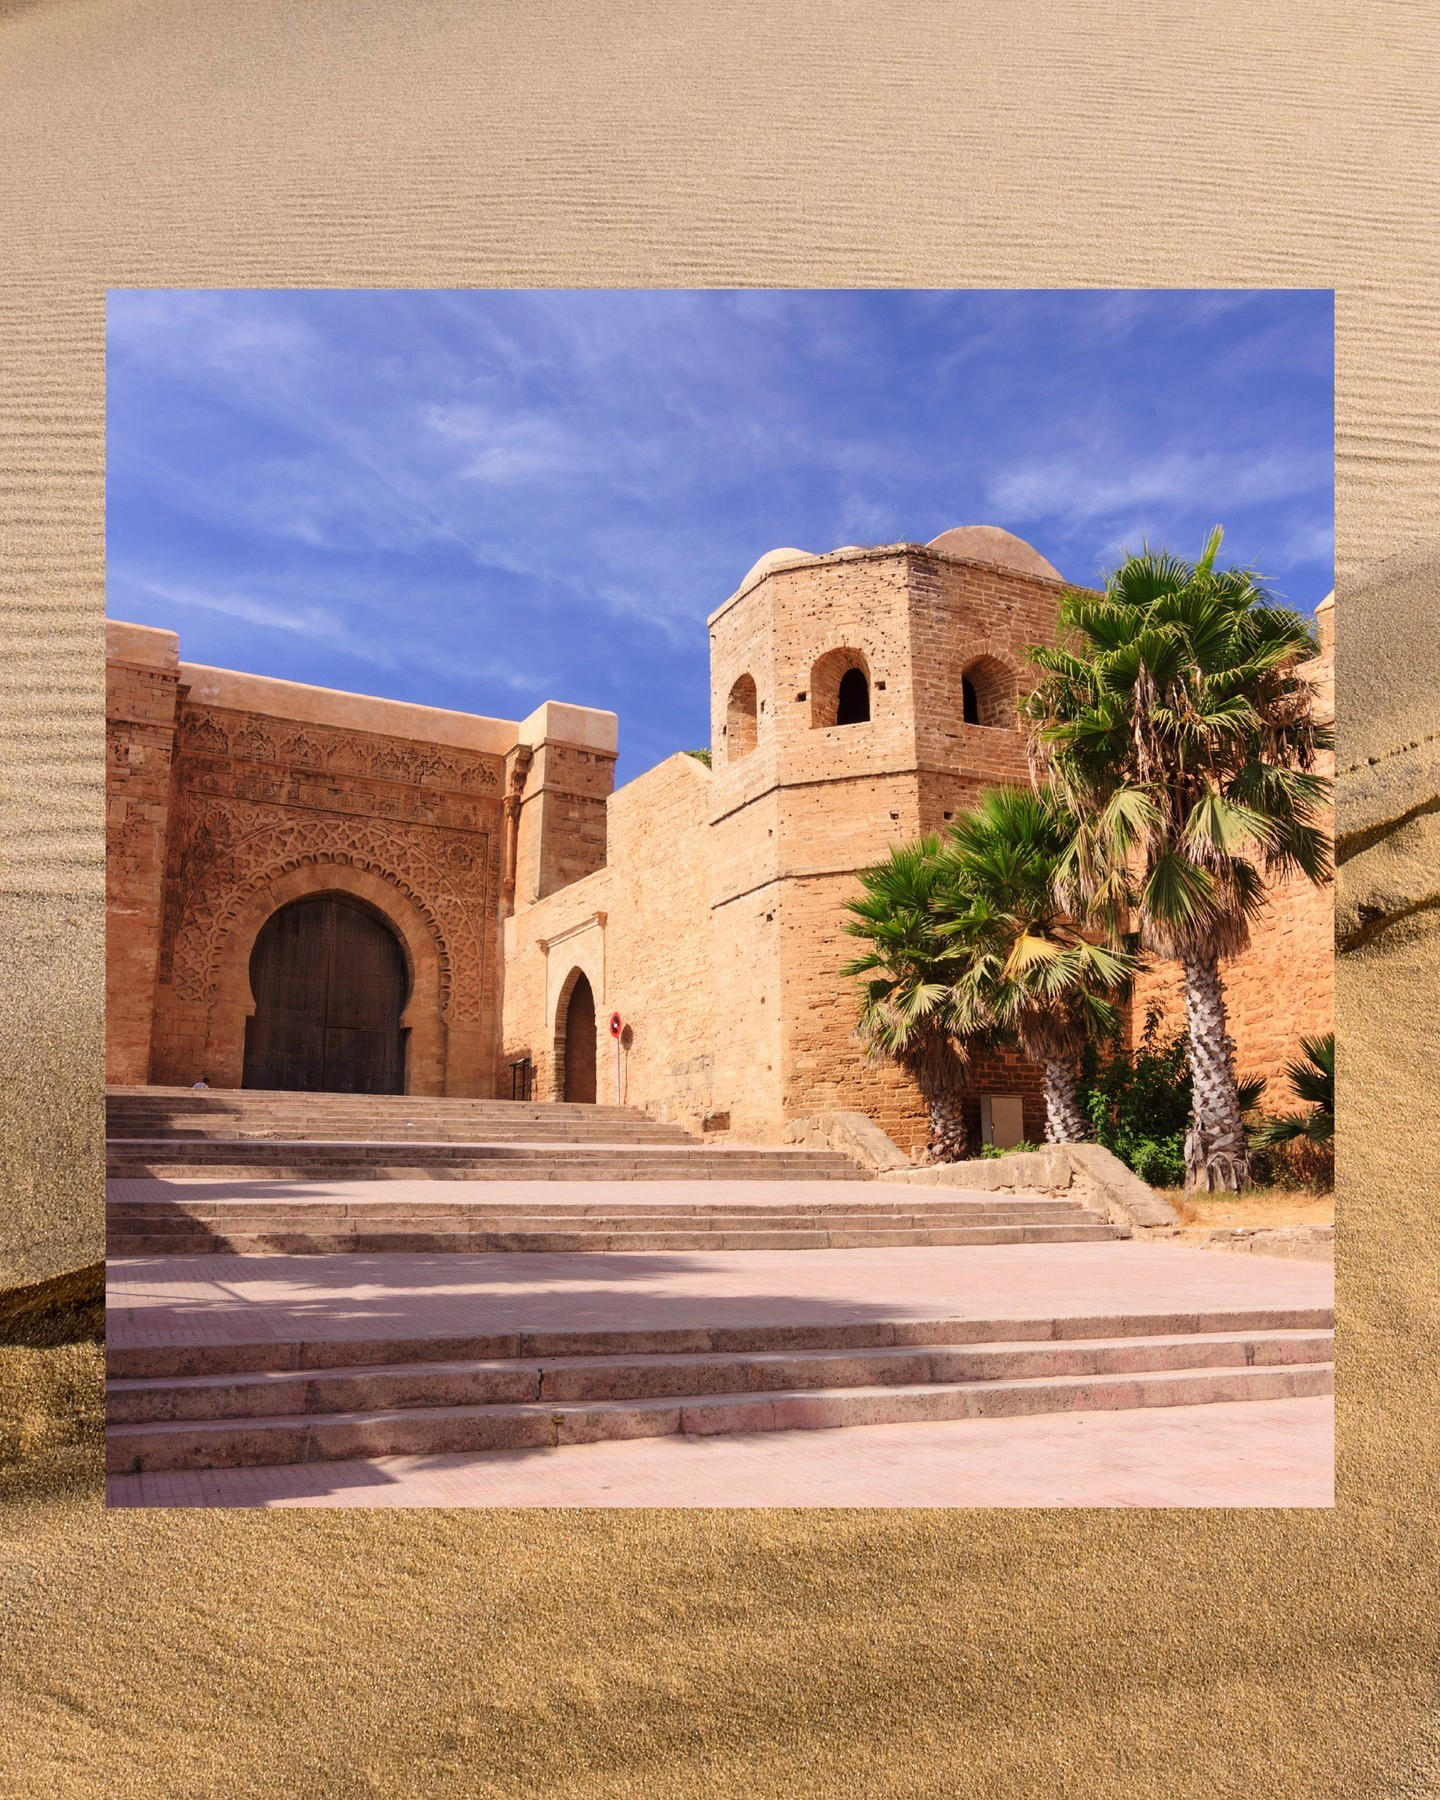 image  1 Conrad Hotels - #Conrad_Rabat_Arzana puts you at the heart of Morocco's coastal city of Temara